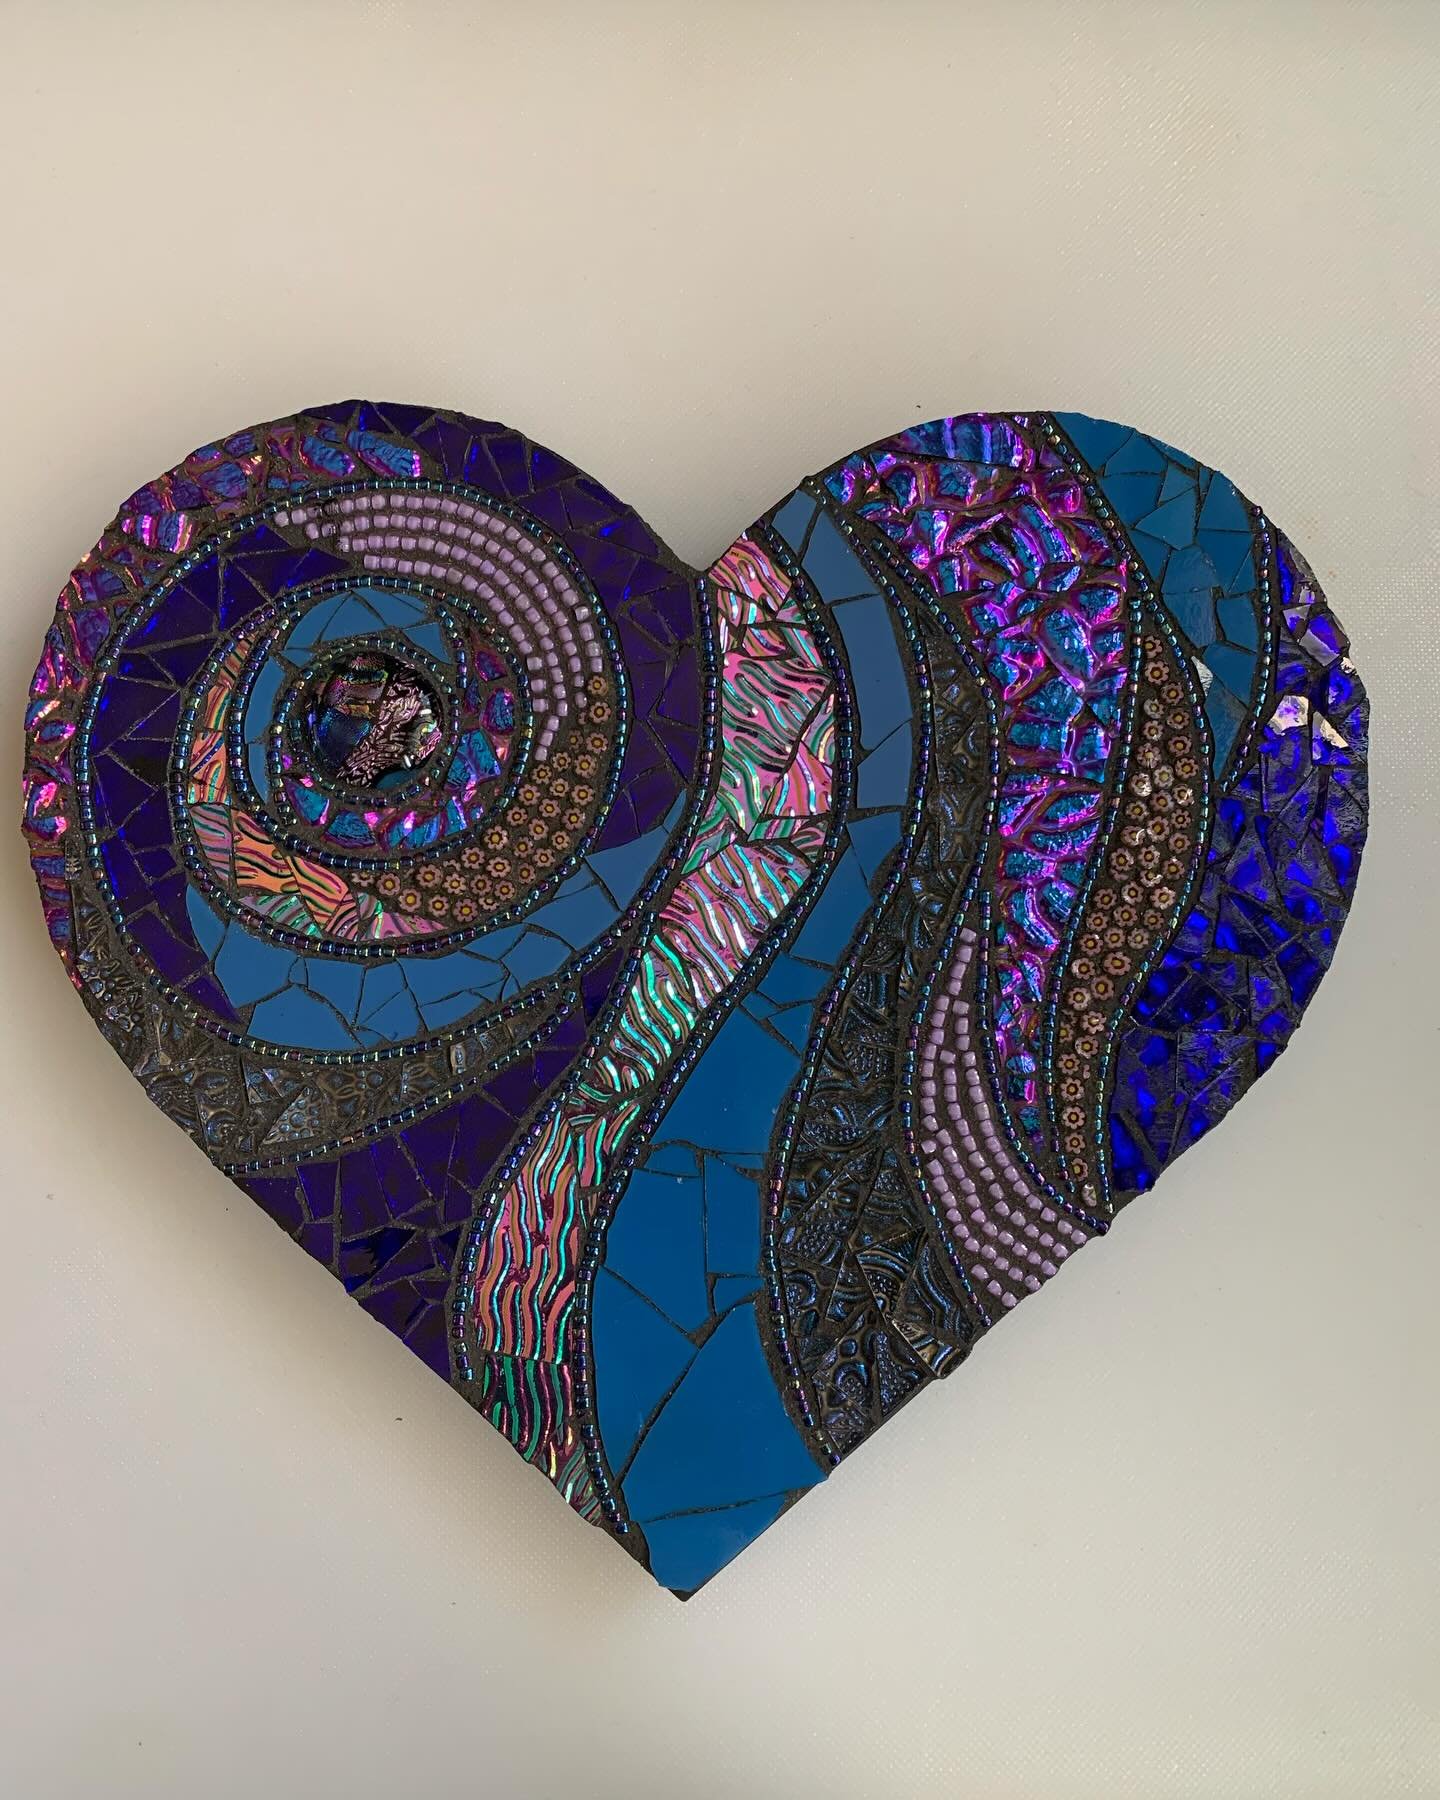 Mosaic heart @mosaicheart @mosaiclove @heart @love @mosaics #newwork #mosaicart #mosaicwallhanging #wallart